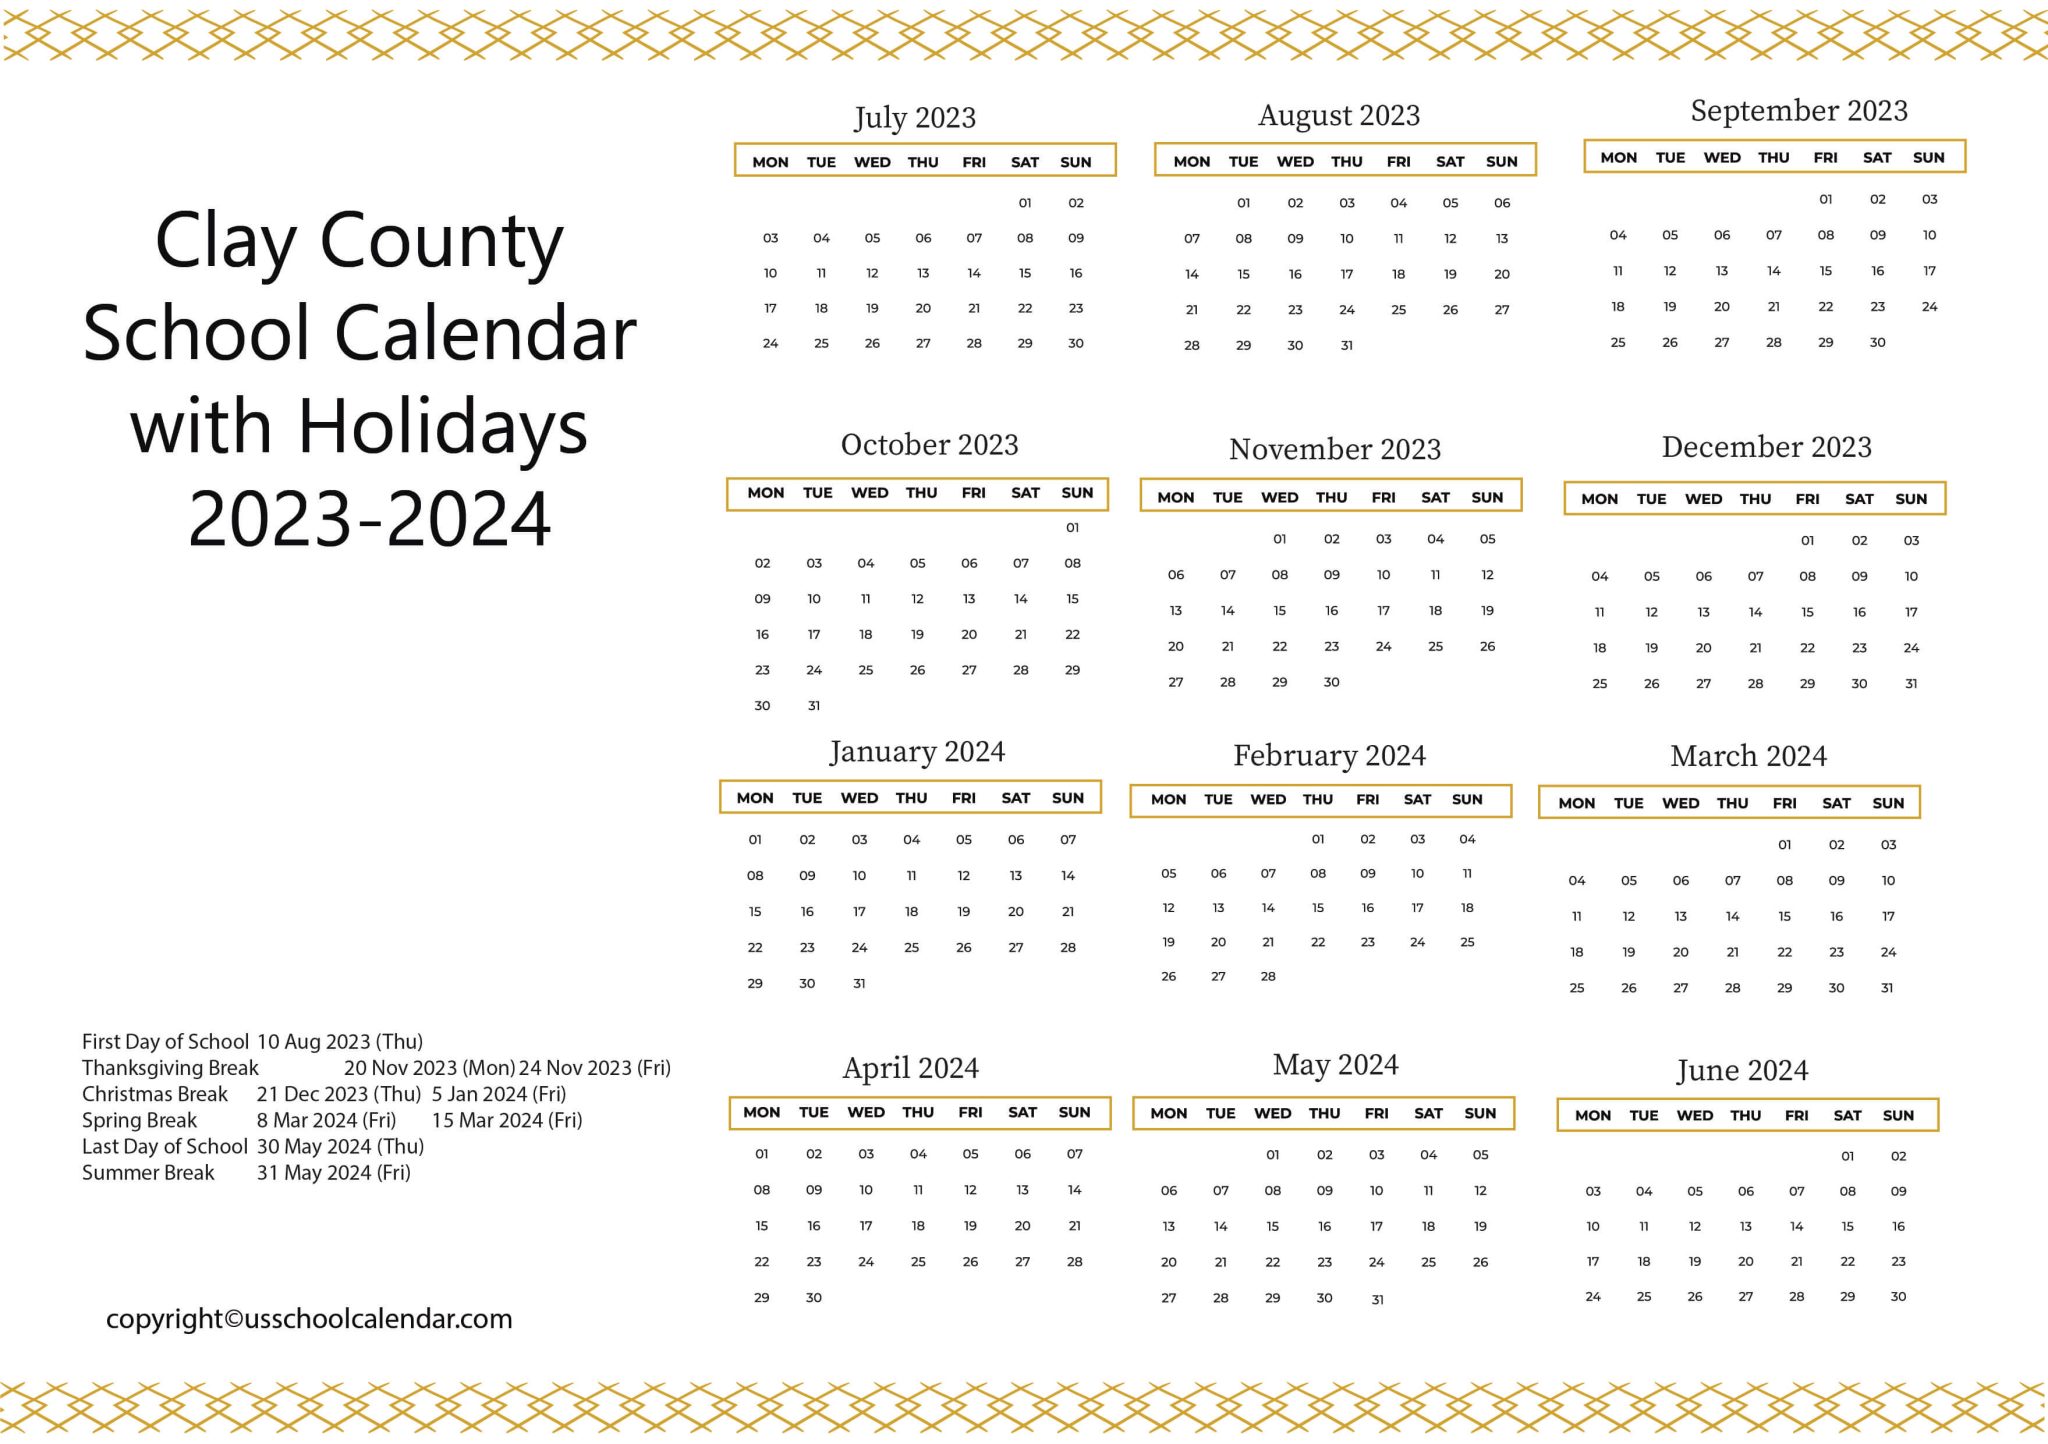 clay-county-school-calendar-with-holidays-2023-2024